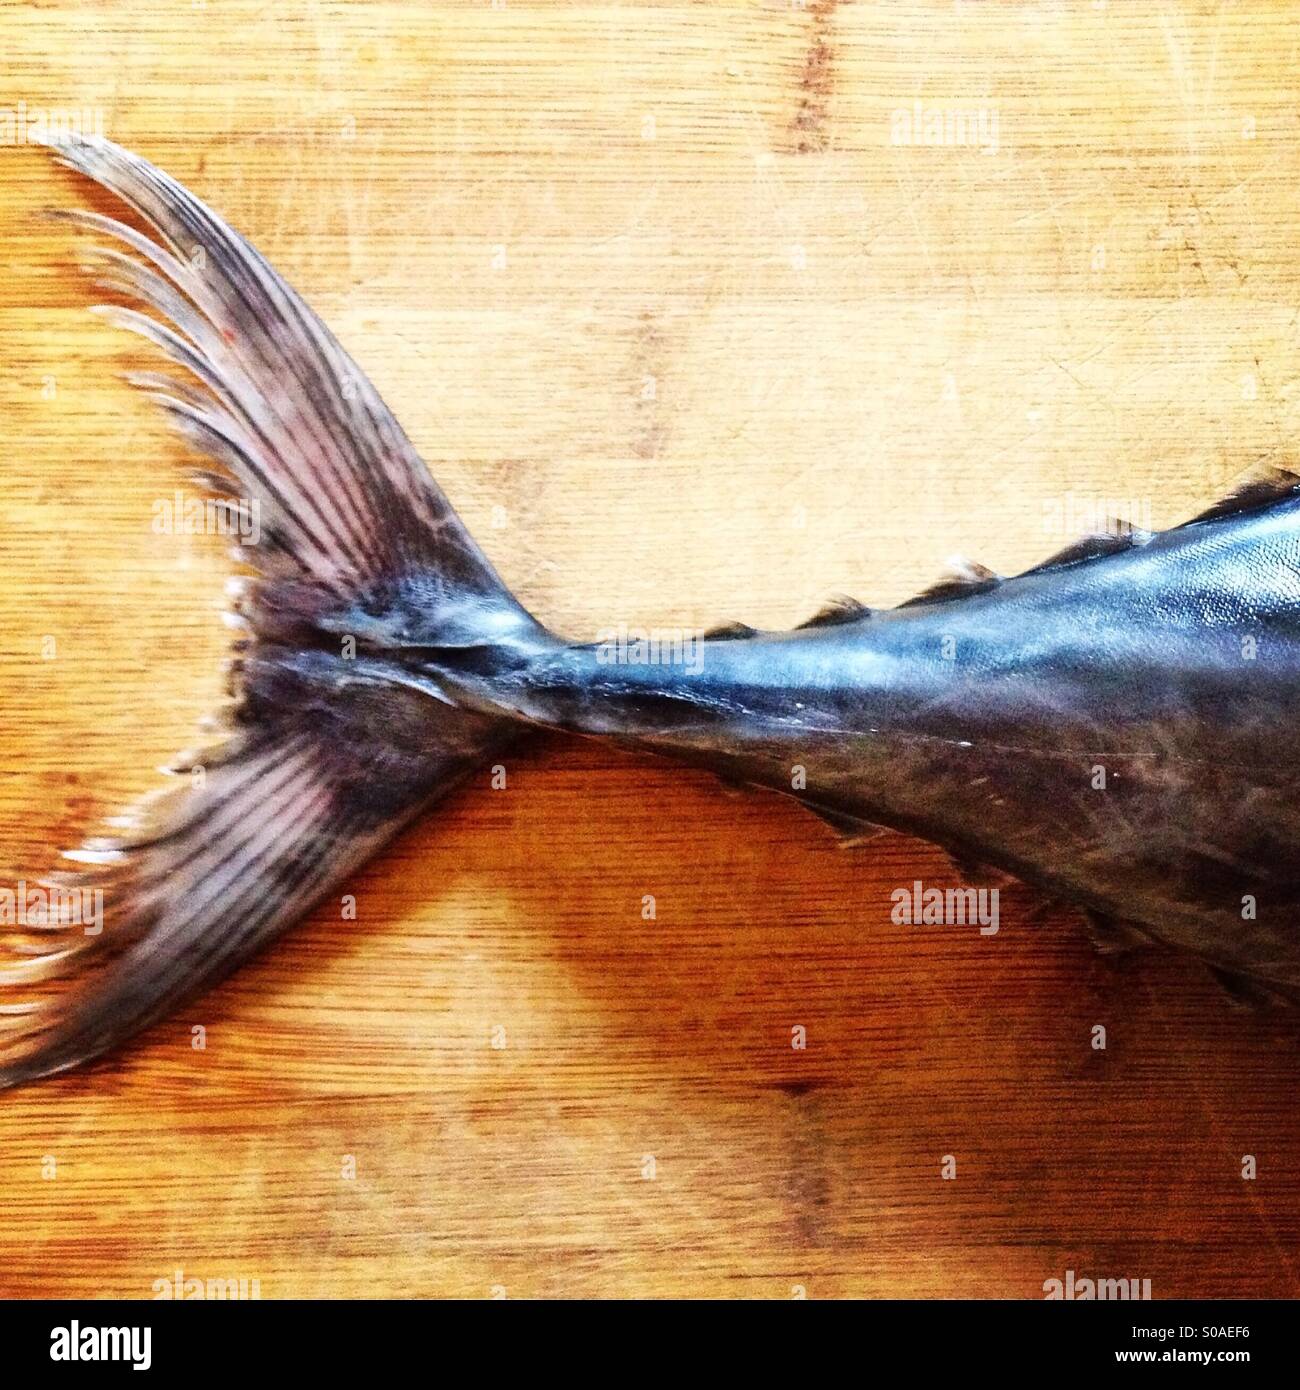 tuna-fish-tail-on-wooden-board-backgroun